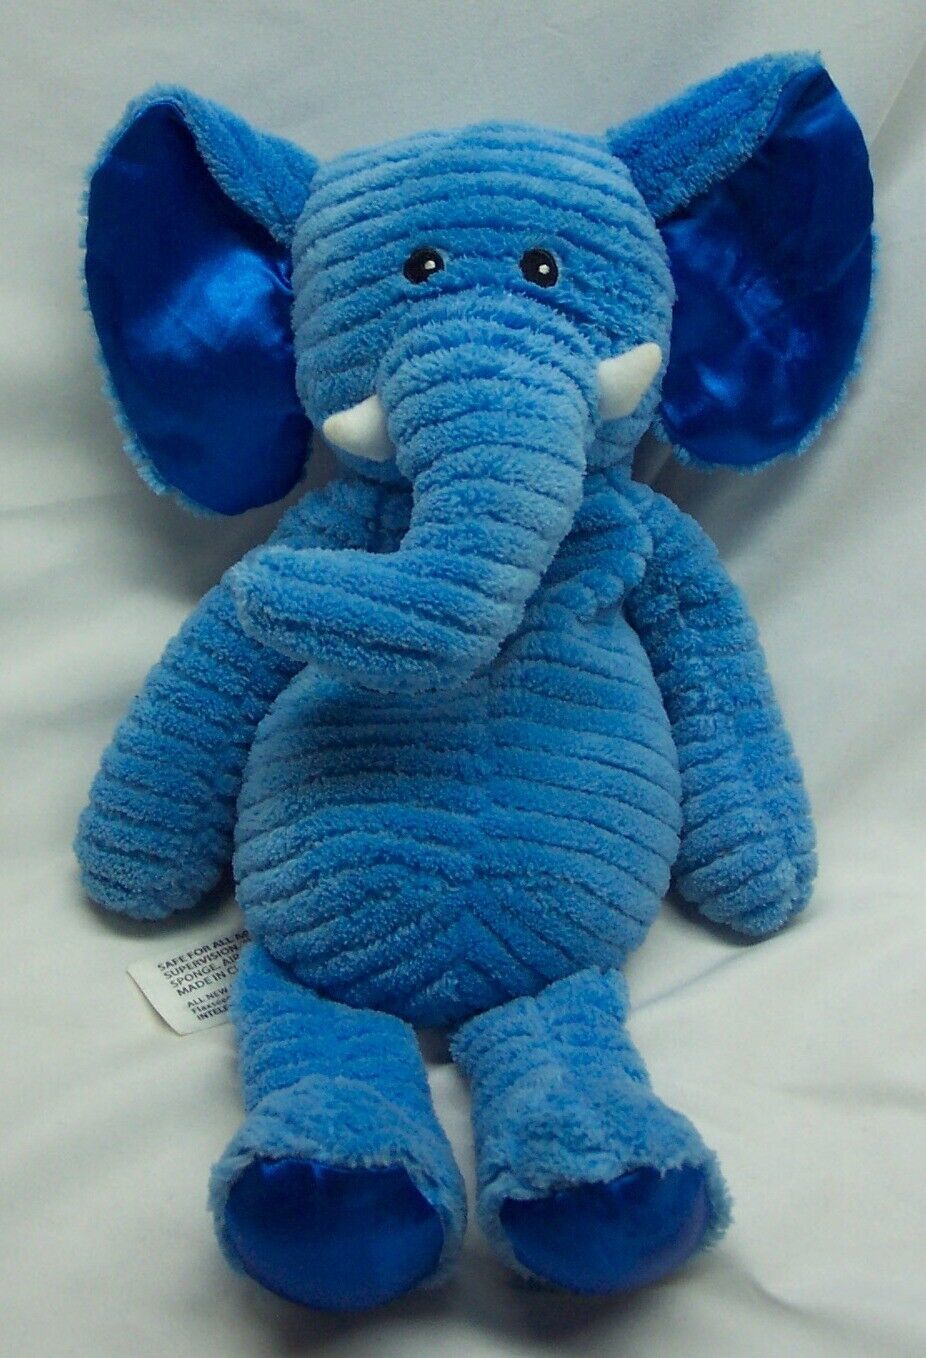 Warmies SOFT MICROWAVABLE LAVENDER HEATING PAD BLUE ELEPHANT 14" Stuffed Animal - $19.80